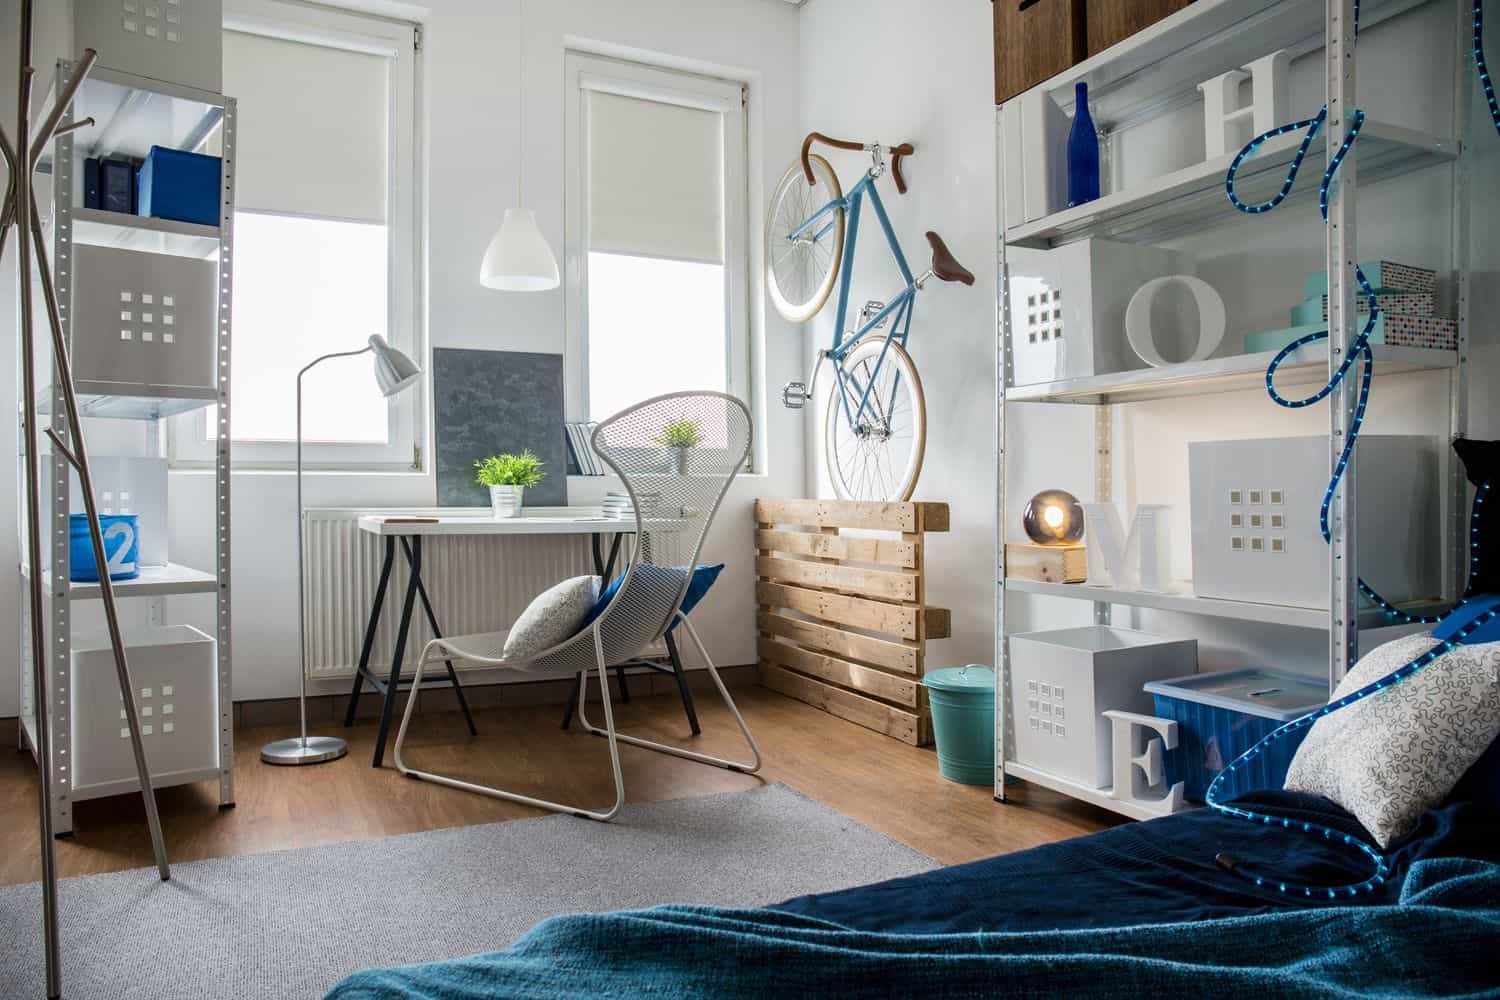 https://blog.unpakt.com/wp-content/uploads/2016/11/47216517_xxl-Picture-of-small-creative-studio-in-flat-small-apartment_result.jpg